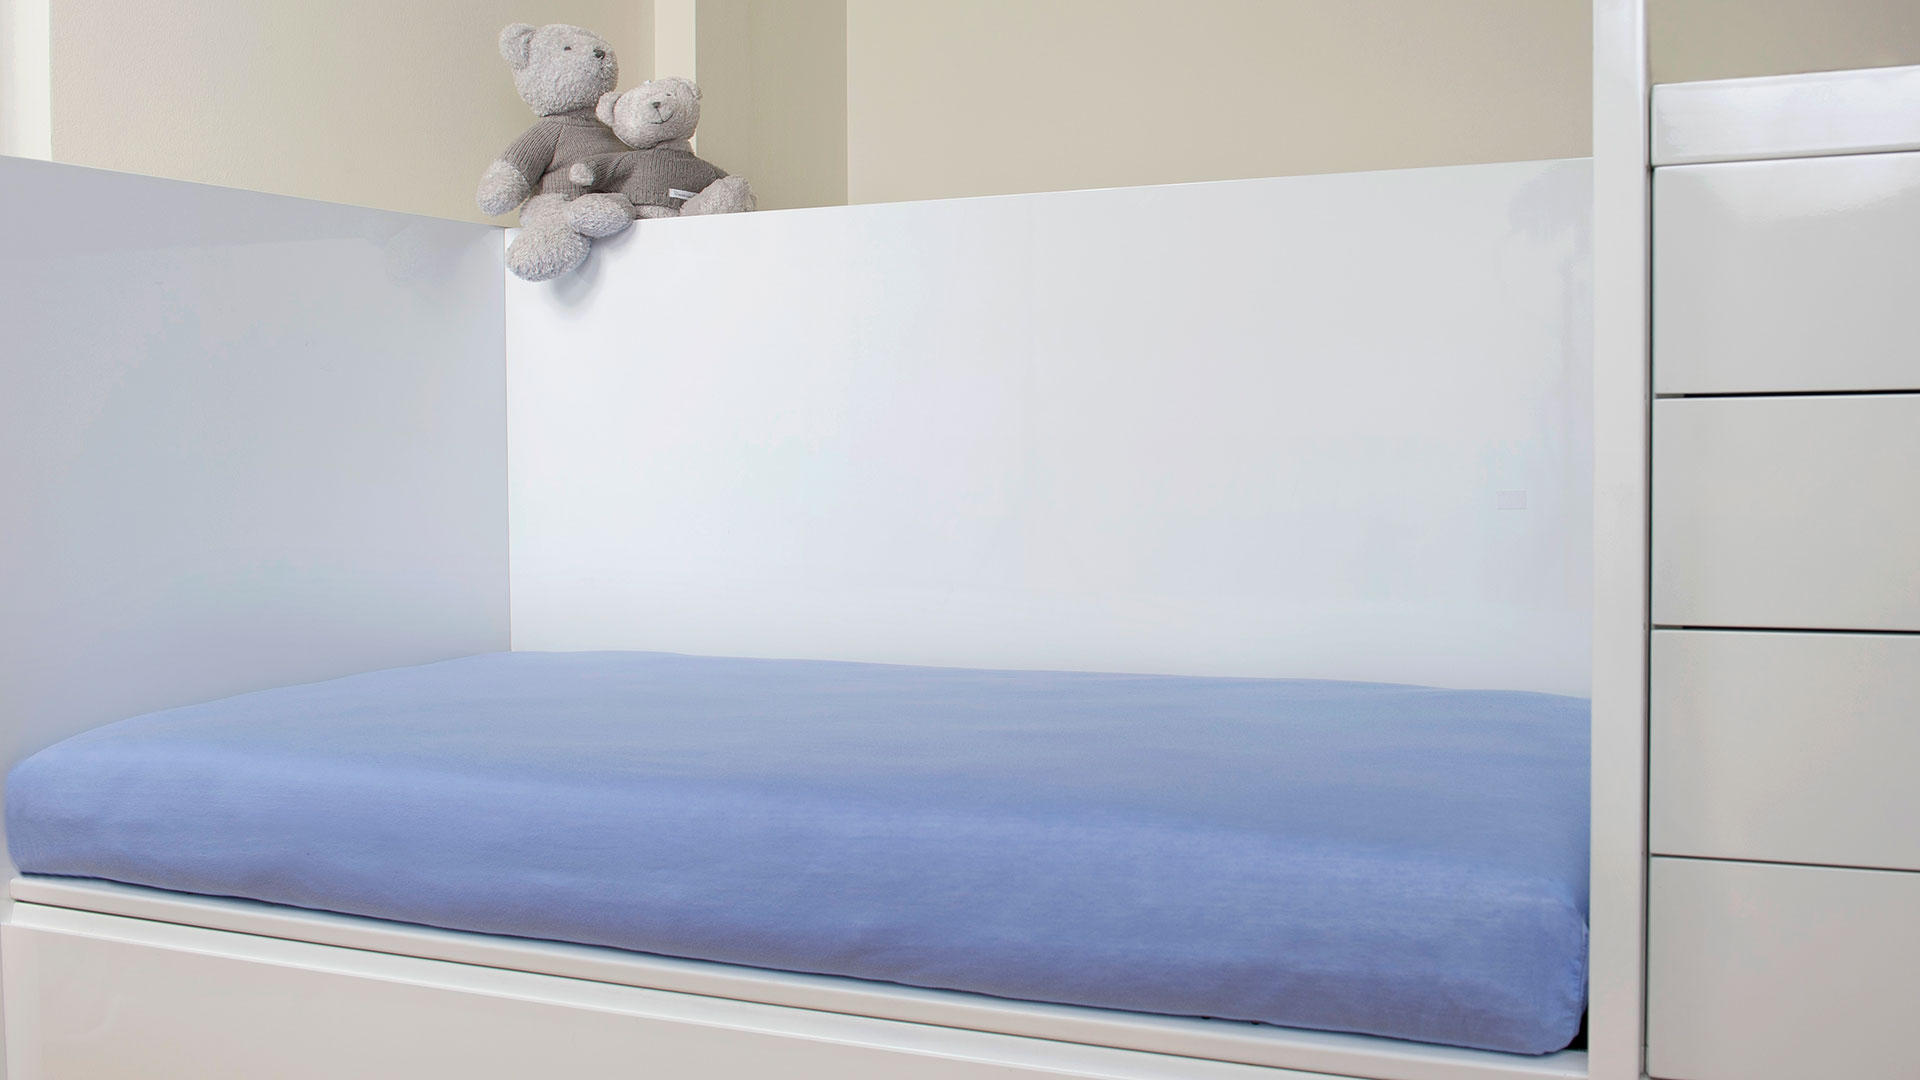 NATURZINC waterproof fitted sheet for kids